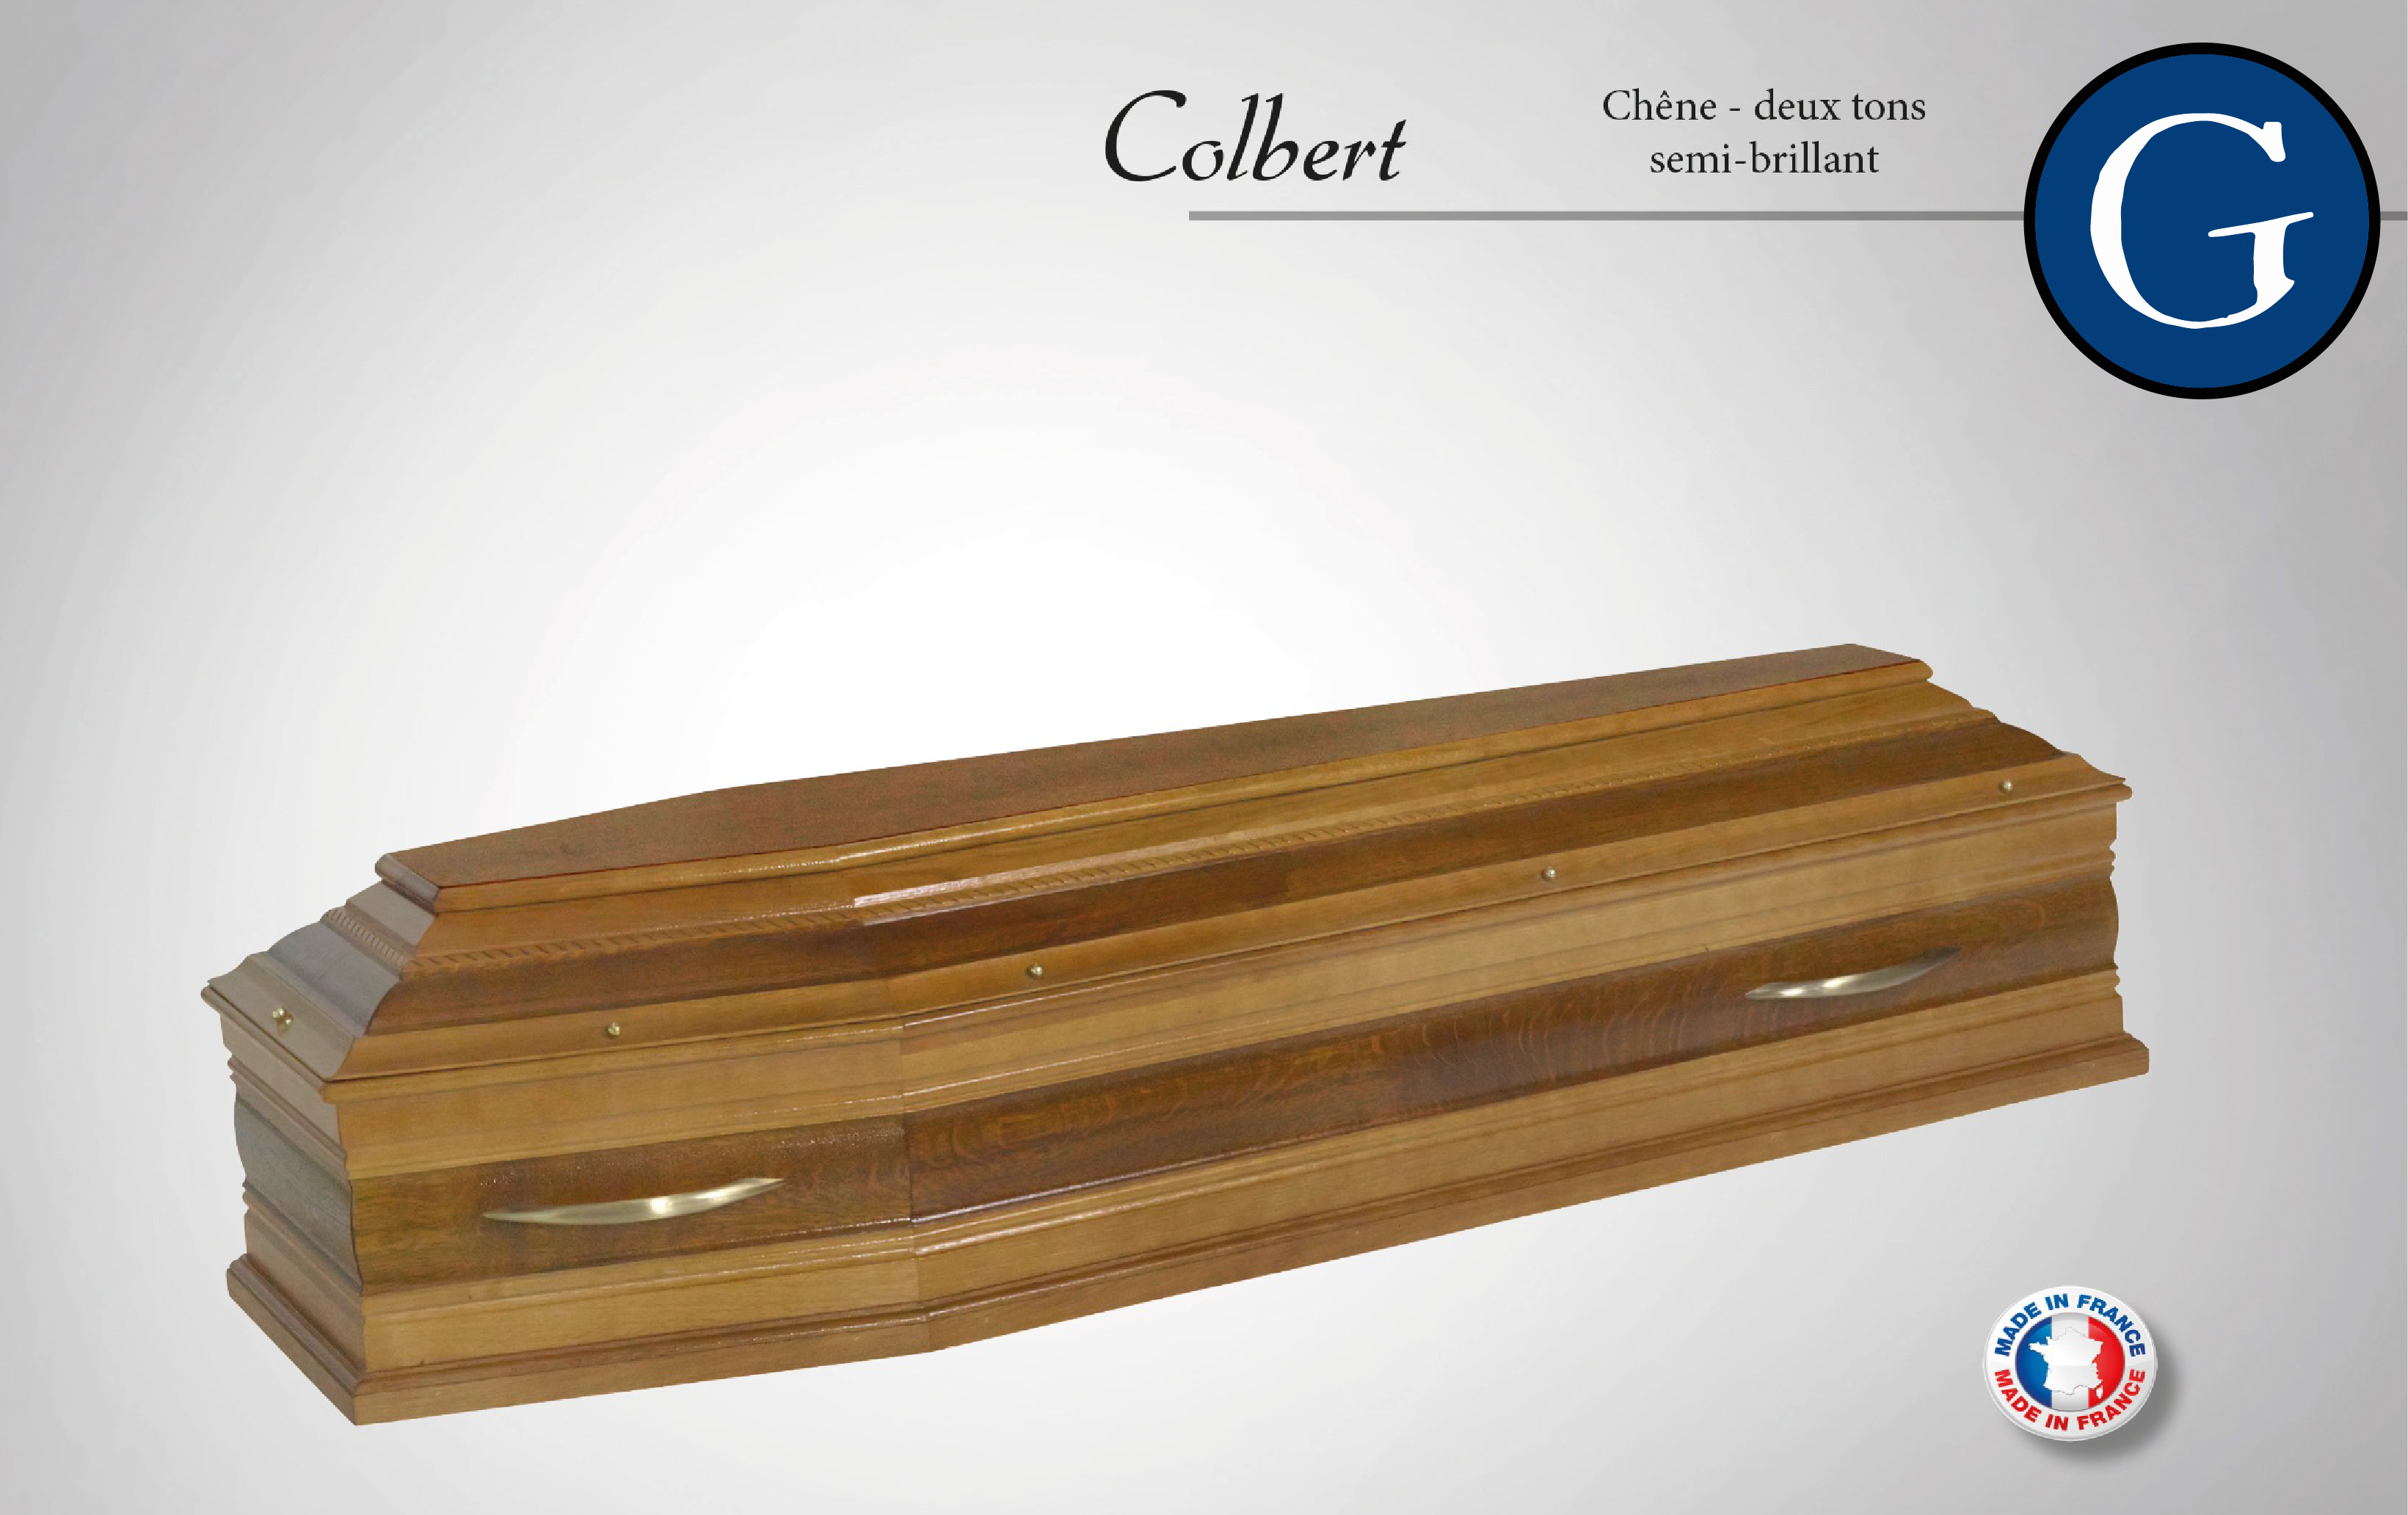 Cercueil Colbert - Chêne deux tons semi-brillant